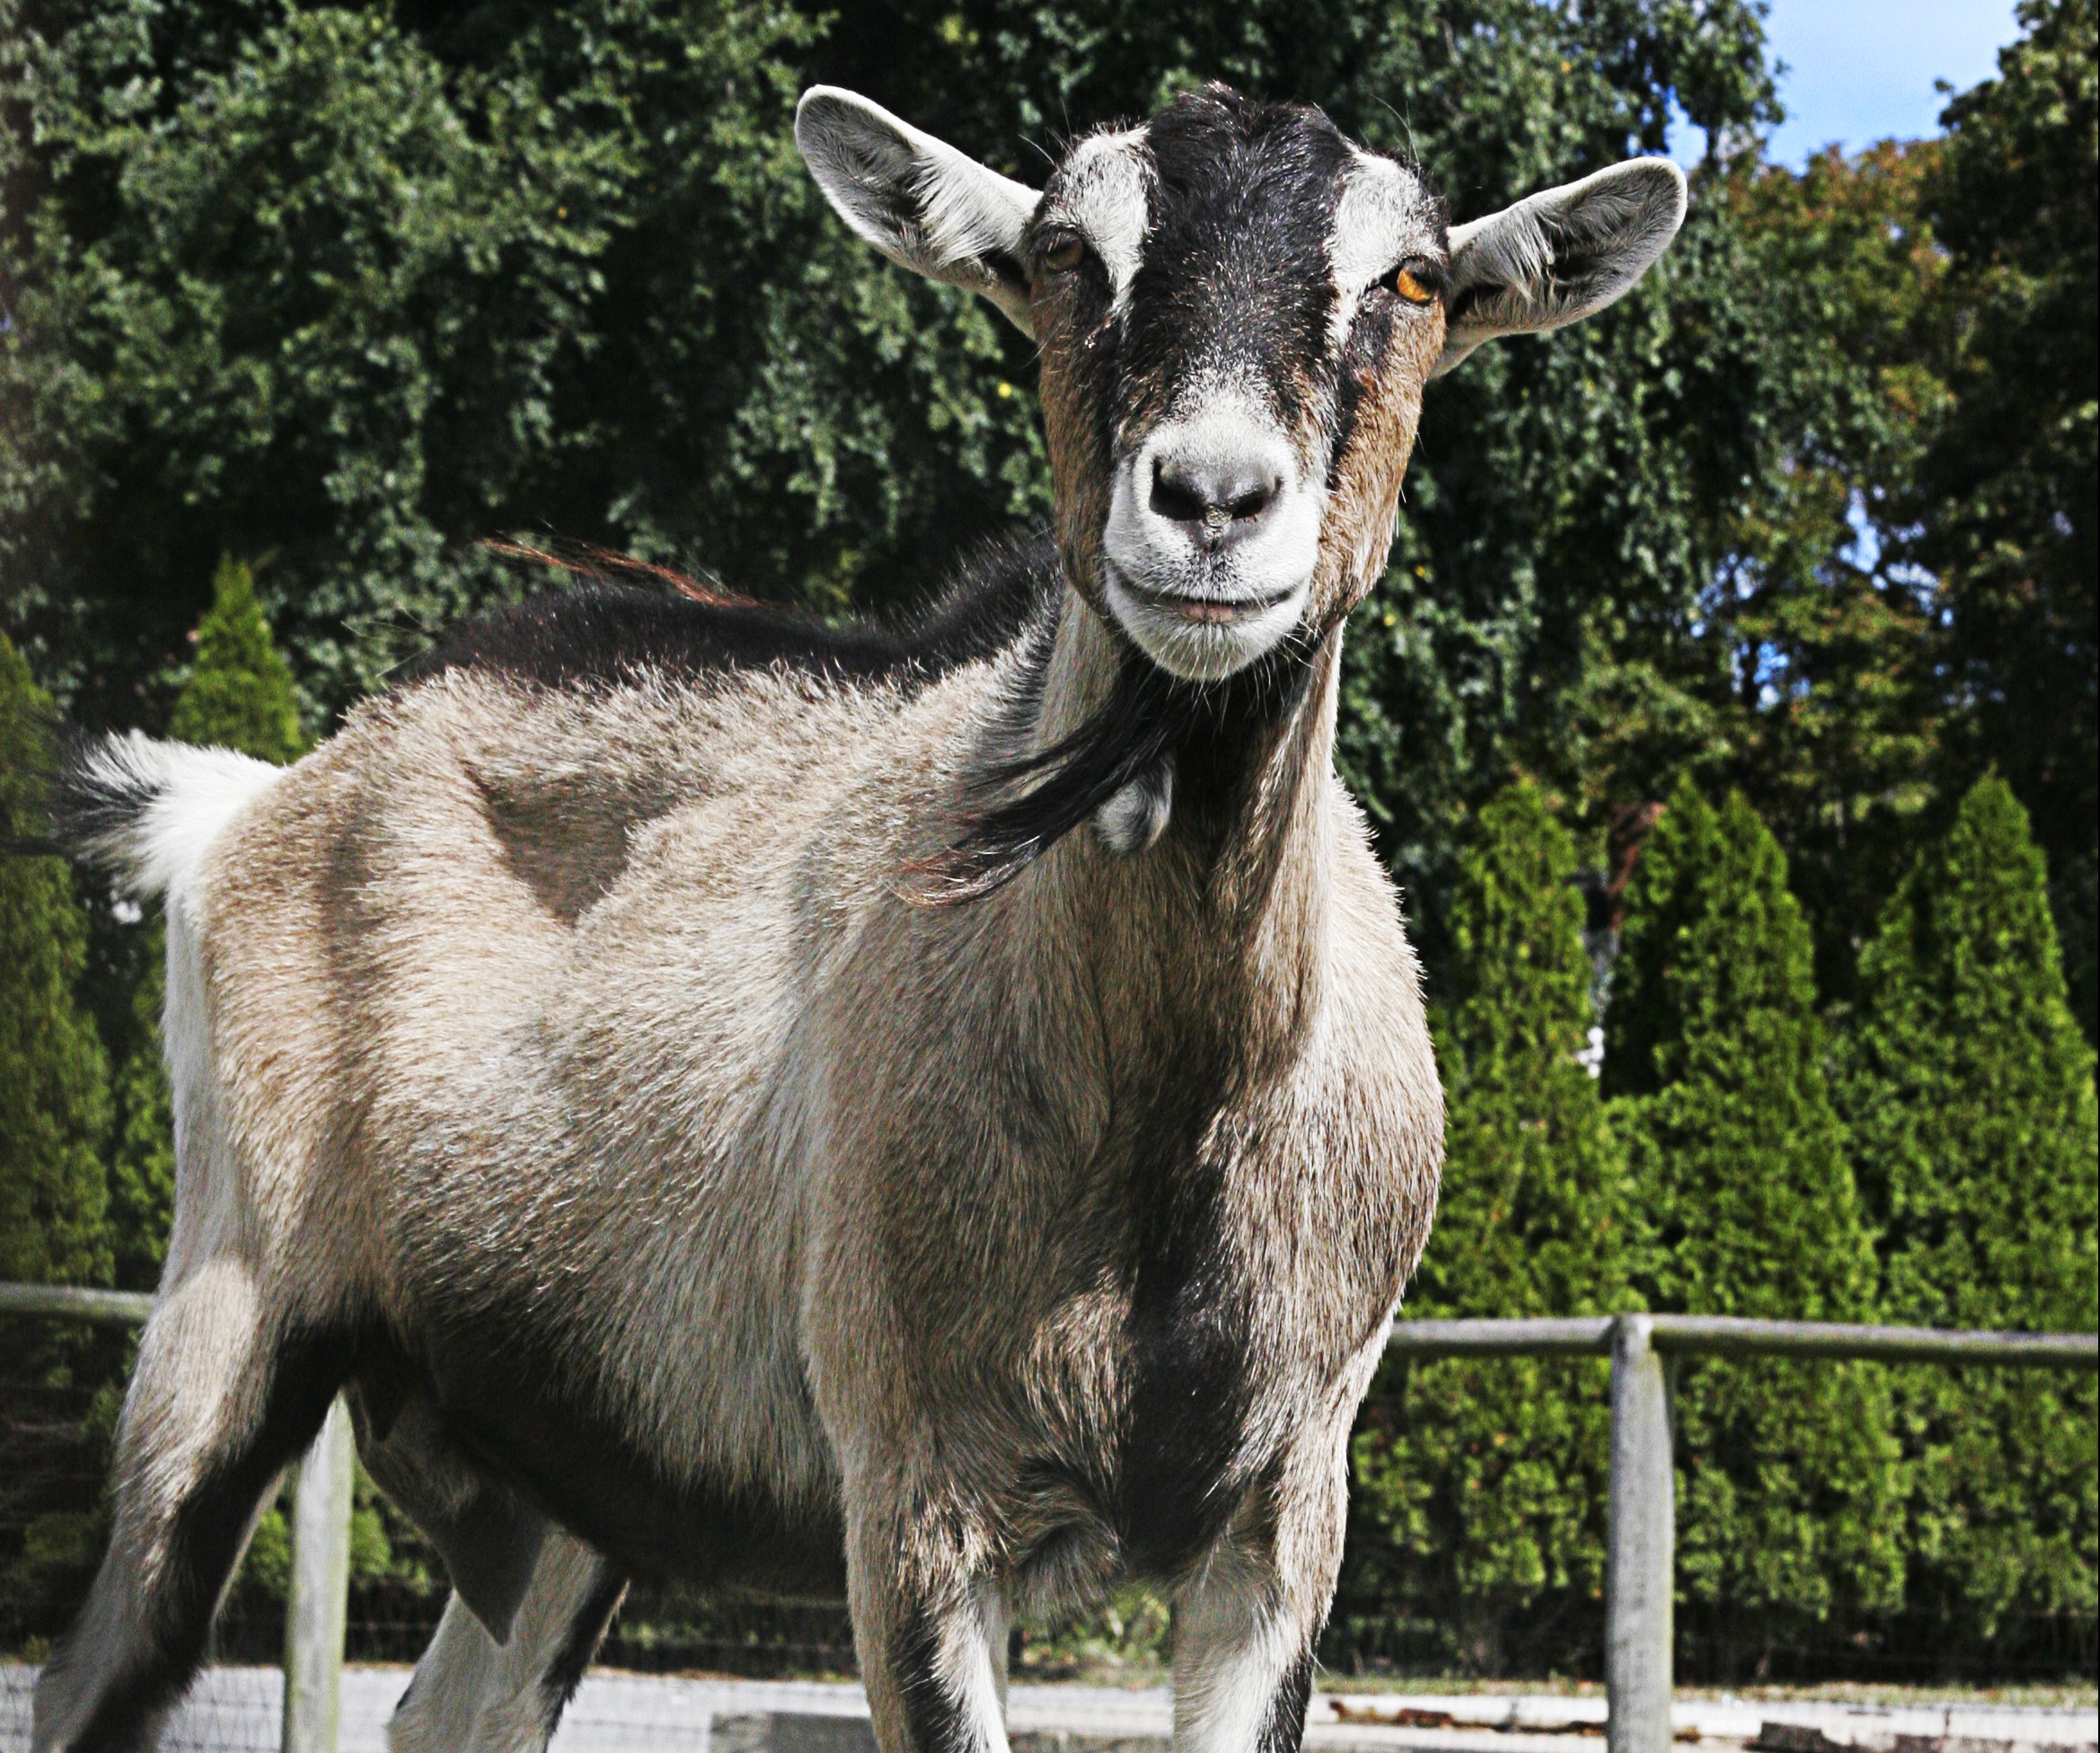 Victory Alert: Cruel Goat Races Cancelled!